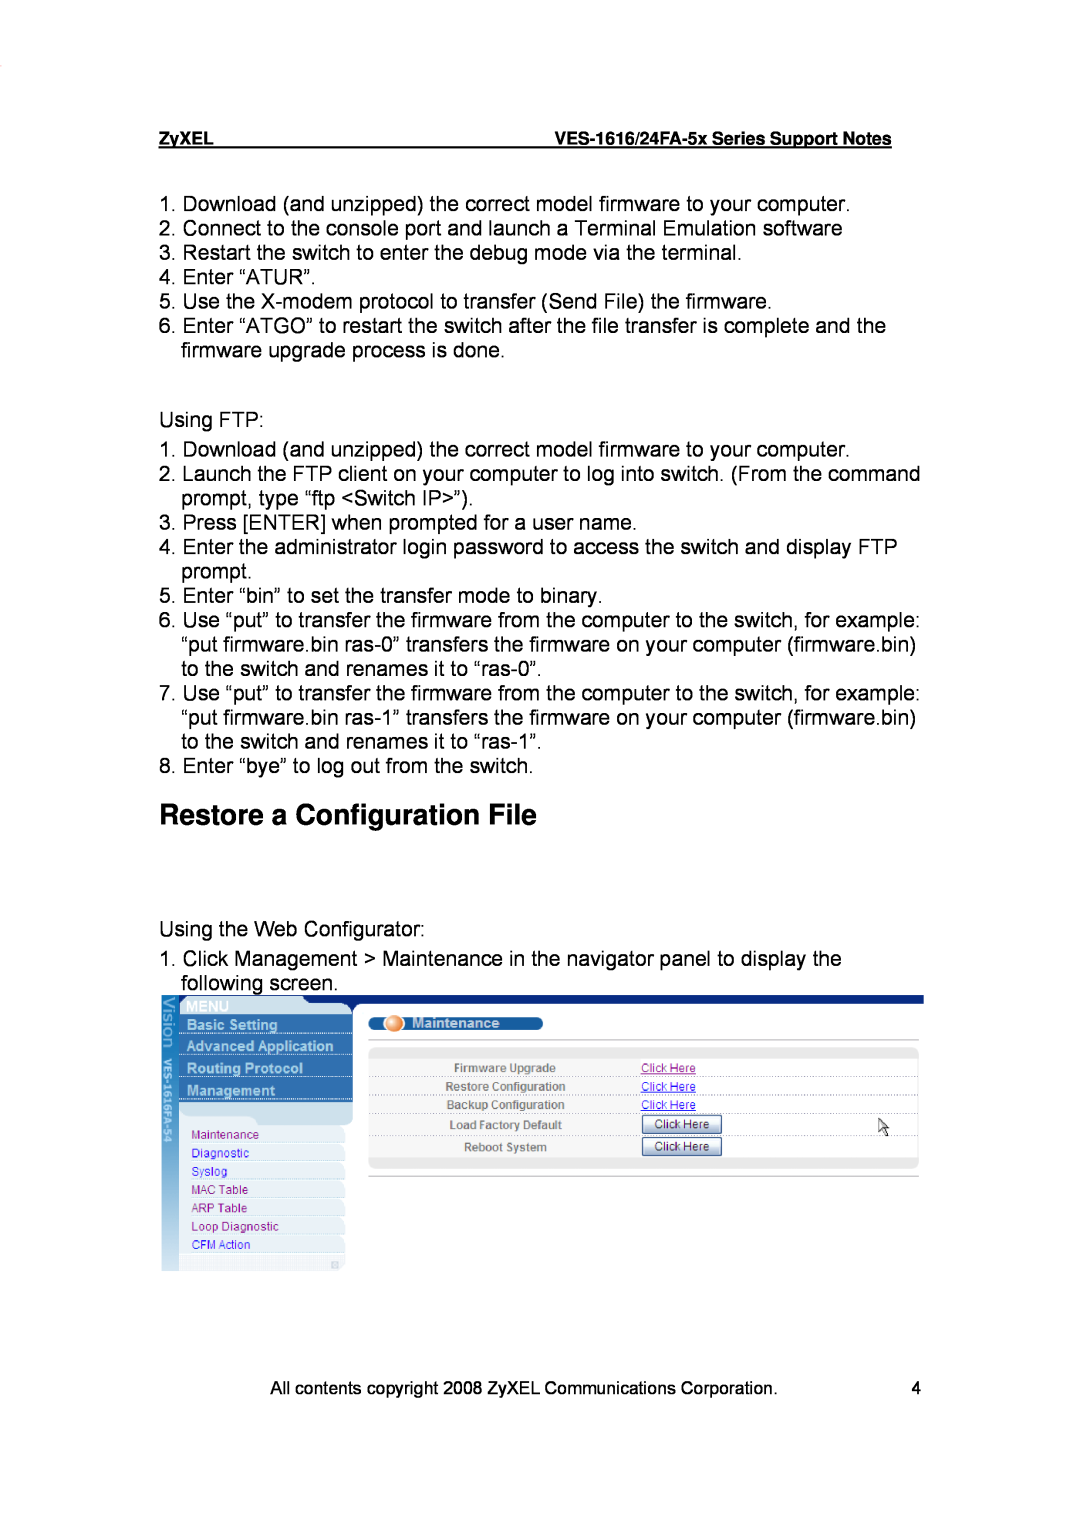 ZyXEL Communications VES-1616 manual Restore a Configuration File 